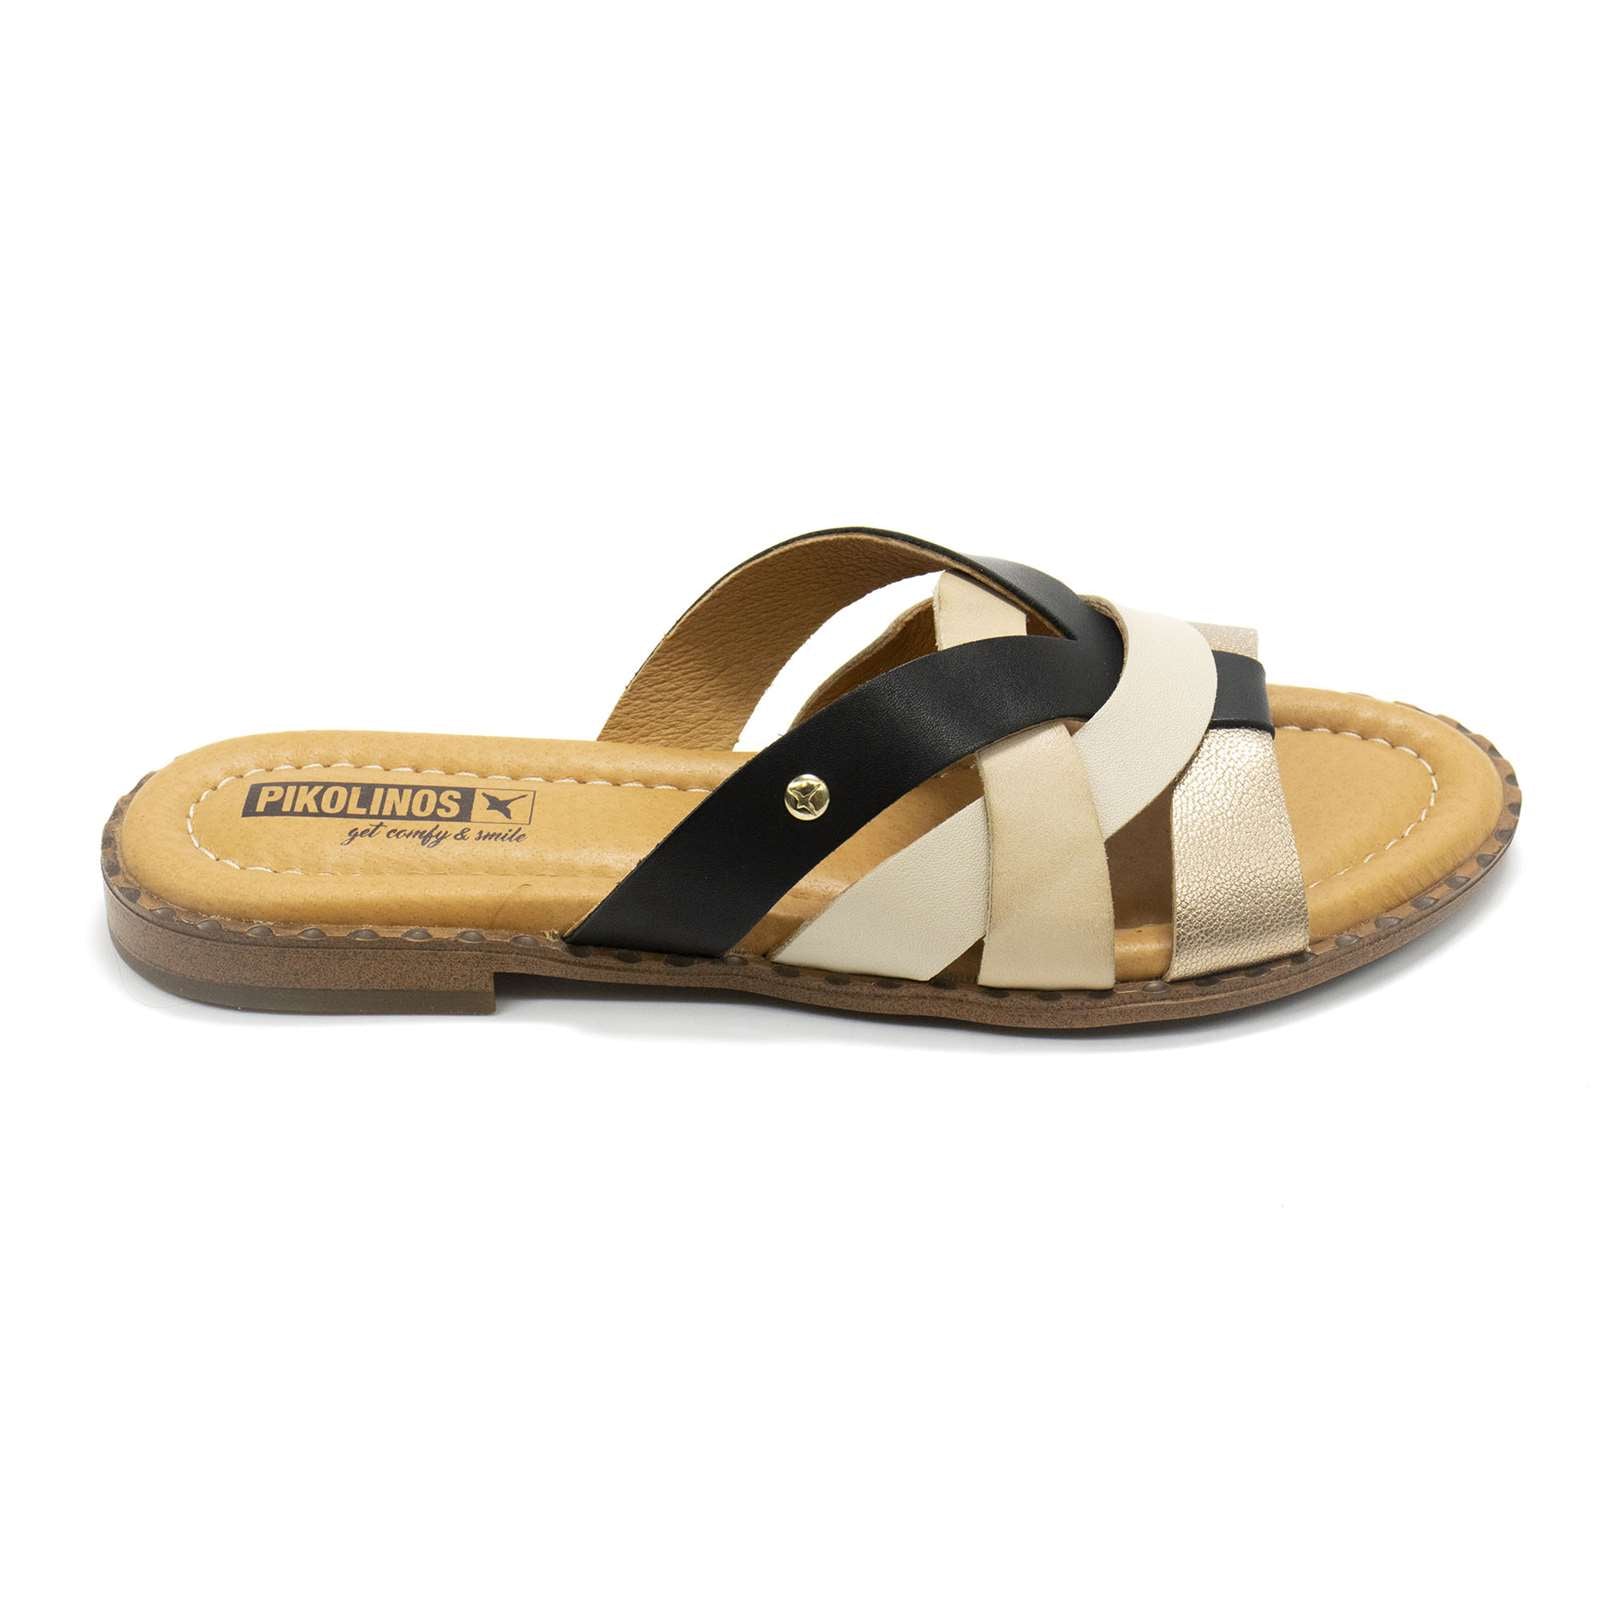 Pikolinos Women Algar Leather Slide Sandals